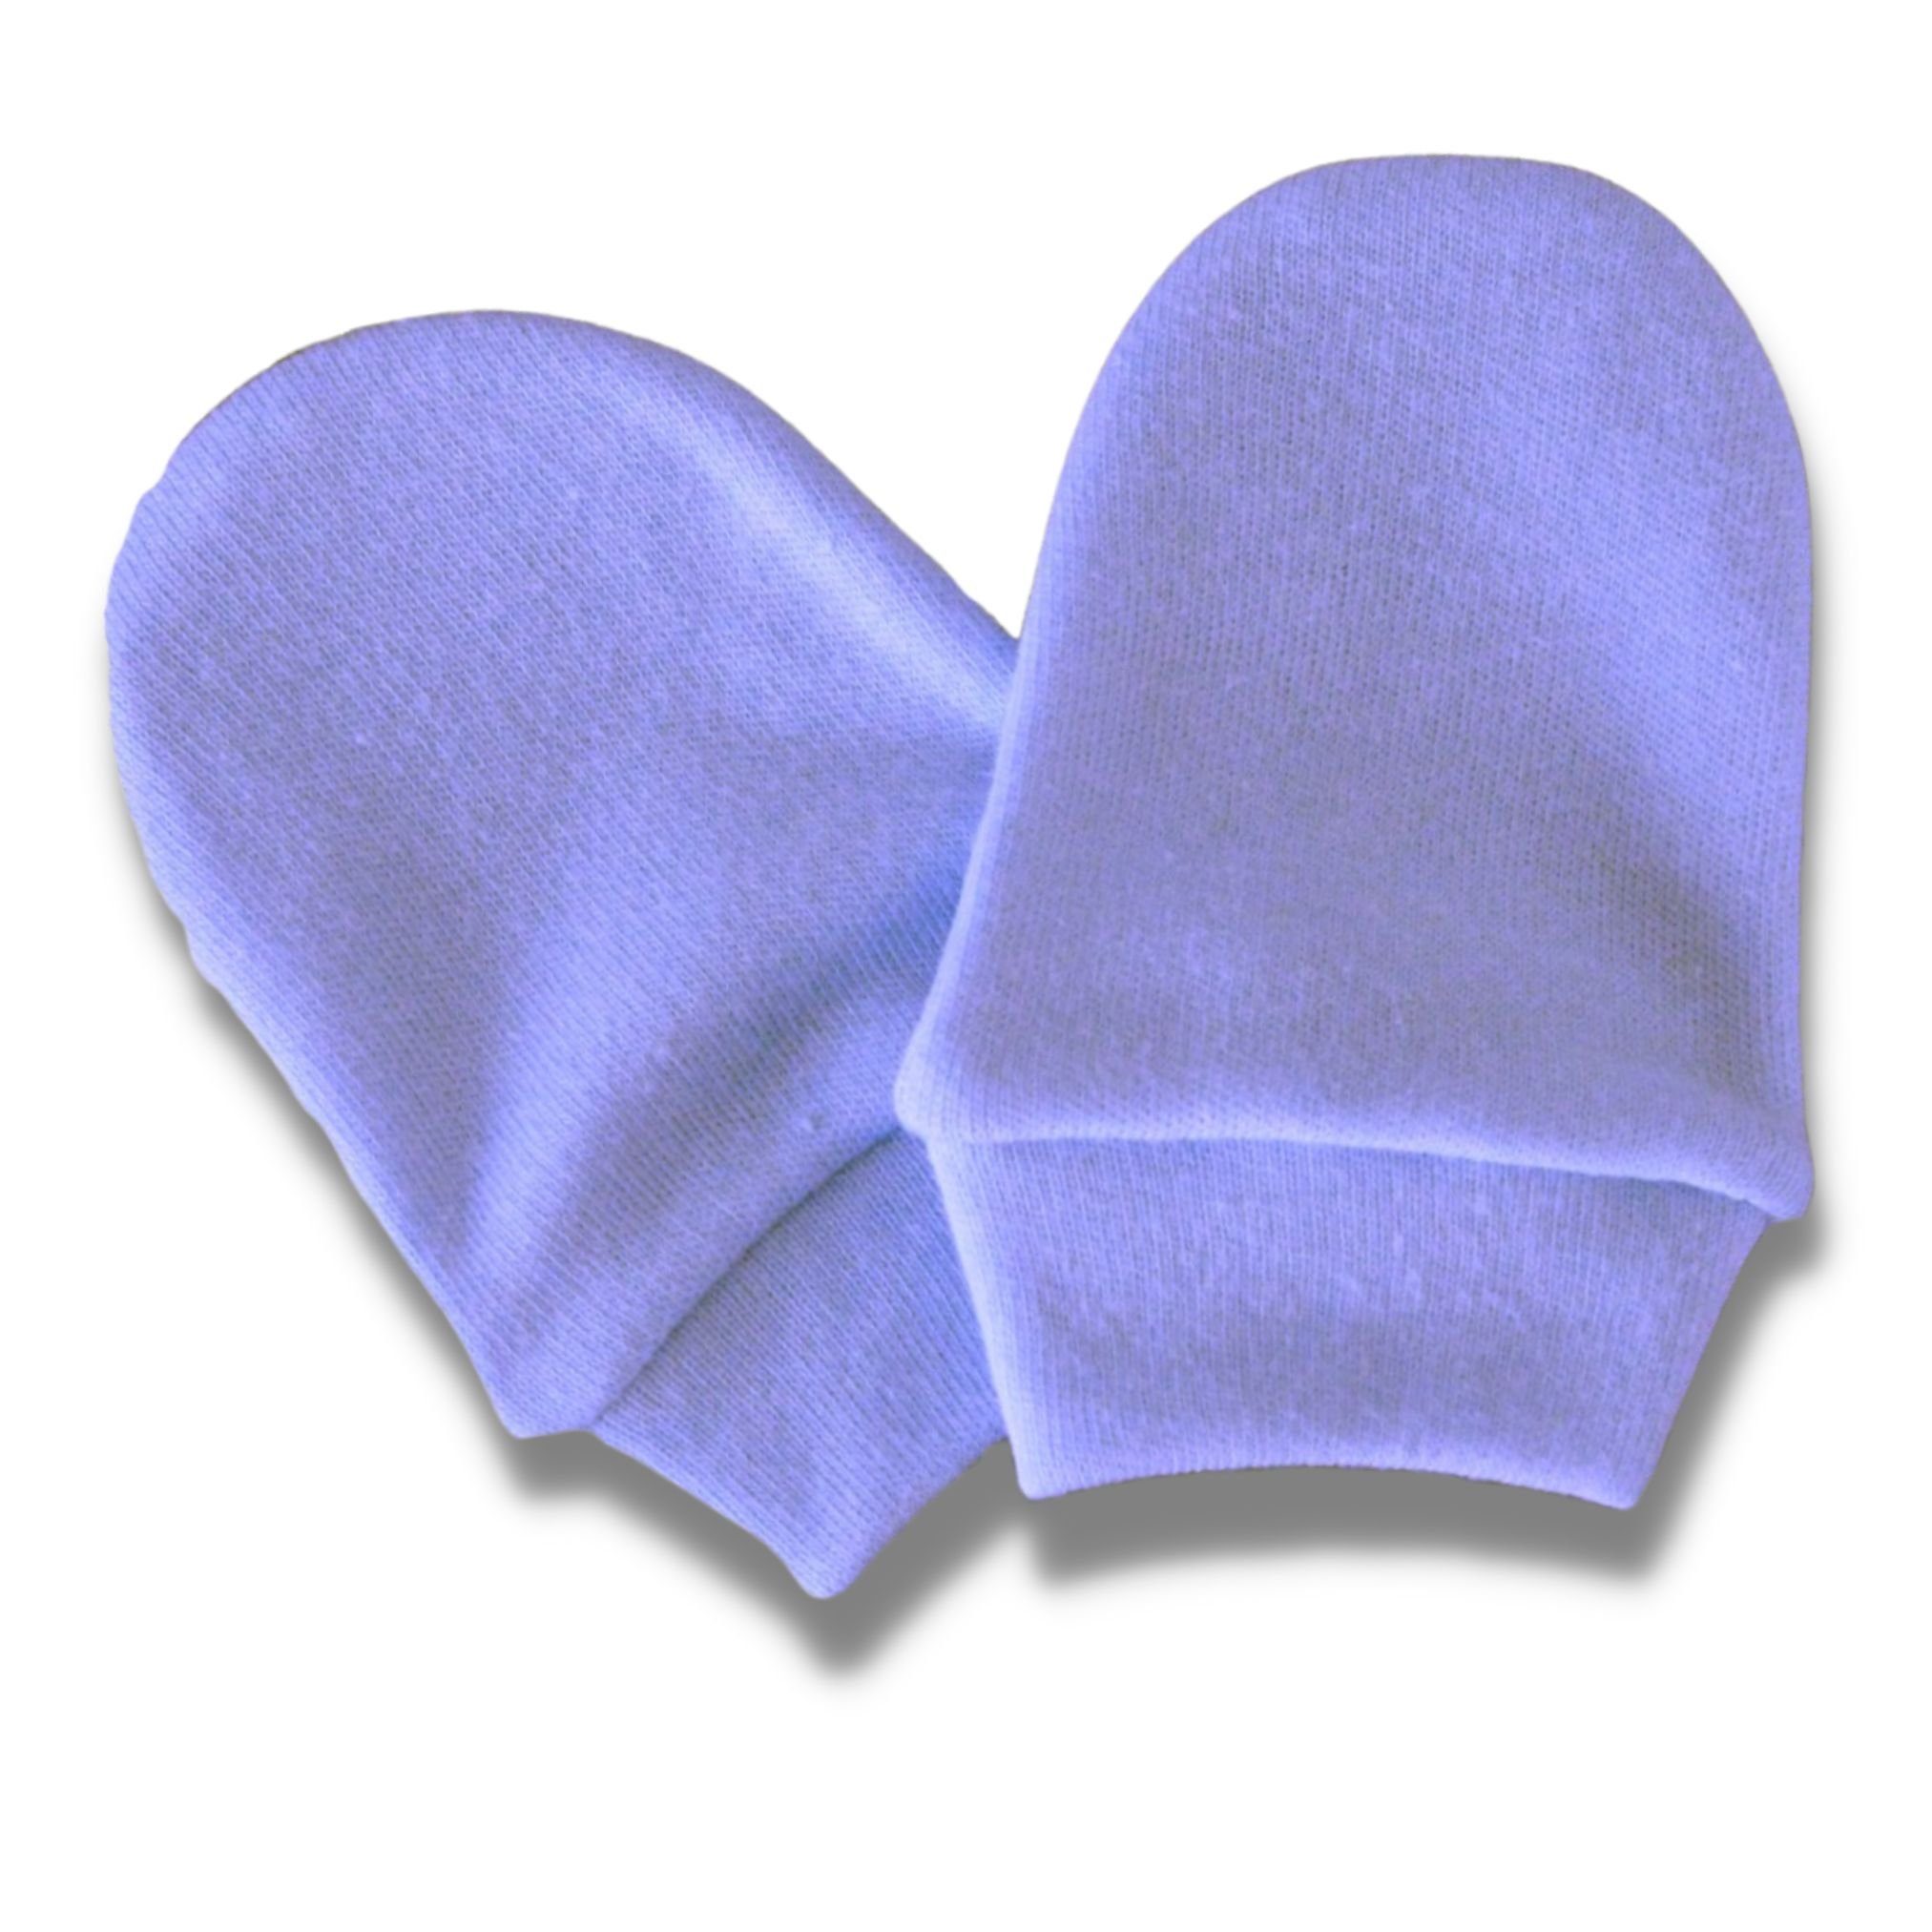 Babyhandschuhe blau für Kratzfäustlinge Made 11244 Atmungsaktiv, EU Neugeborene in Babymajawelt Baumwolle, Baby-Fäustlinge) Reine Baumwollhandschuhe Kratzschutz Fäustlinge (Set,